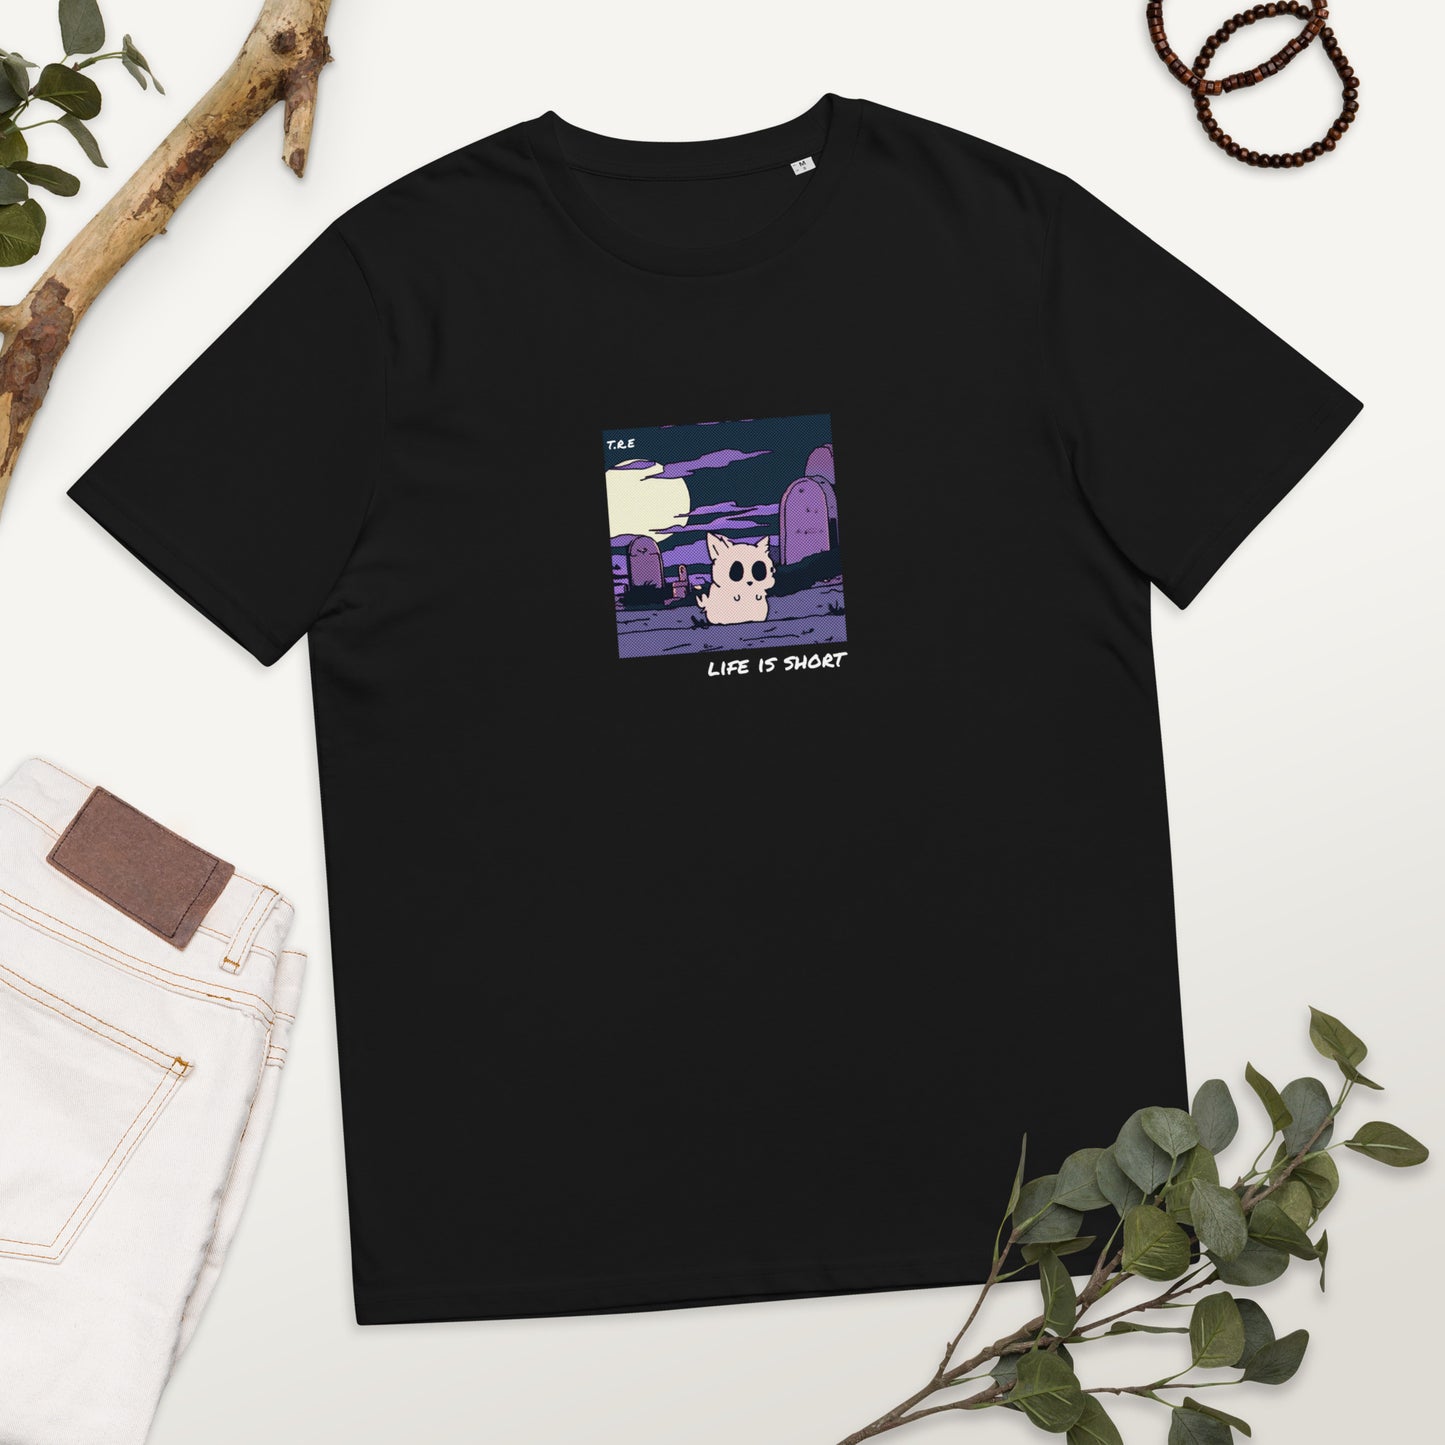 Unisex Organic Cotton T-Shirt - Life Is Short